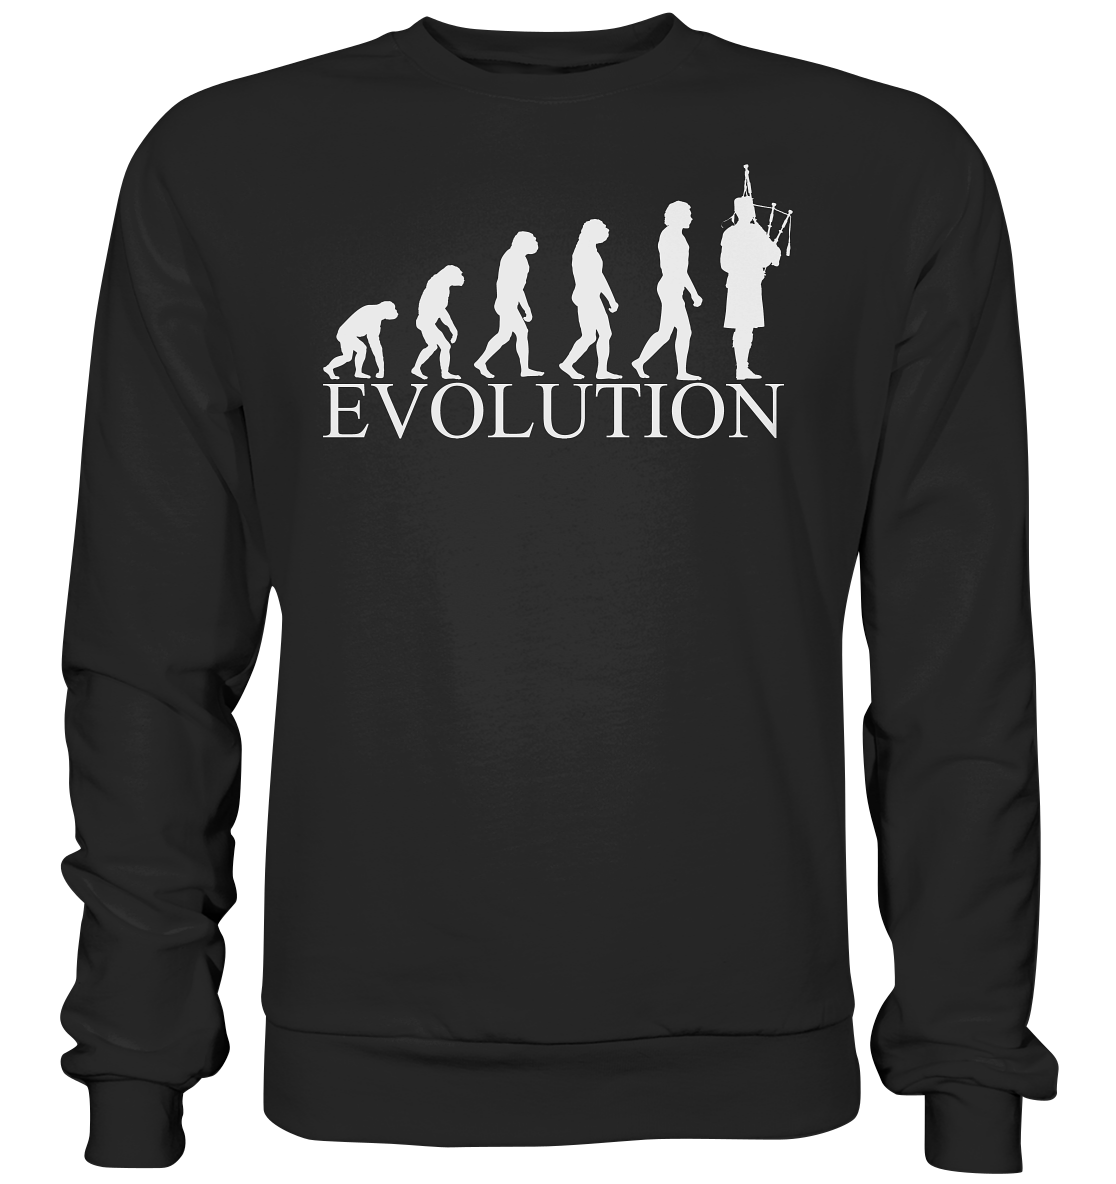 Bagpipe Evolution - Premium Sweatshirt